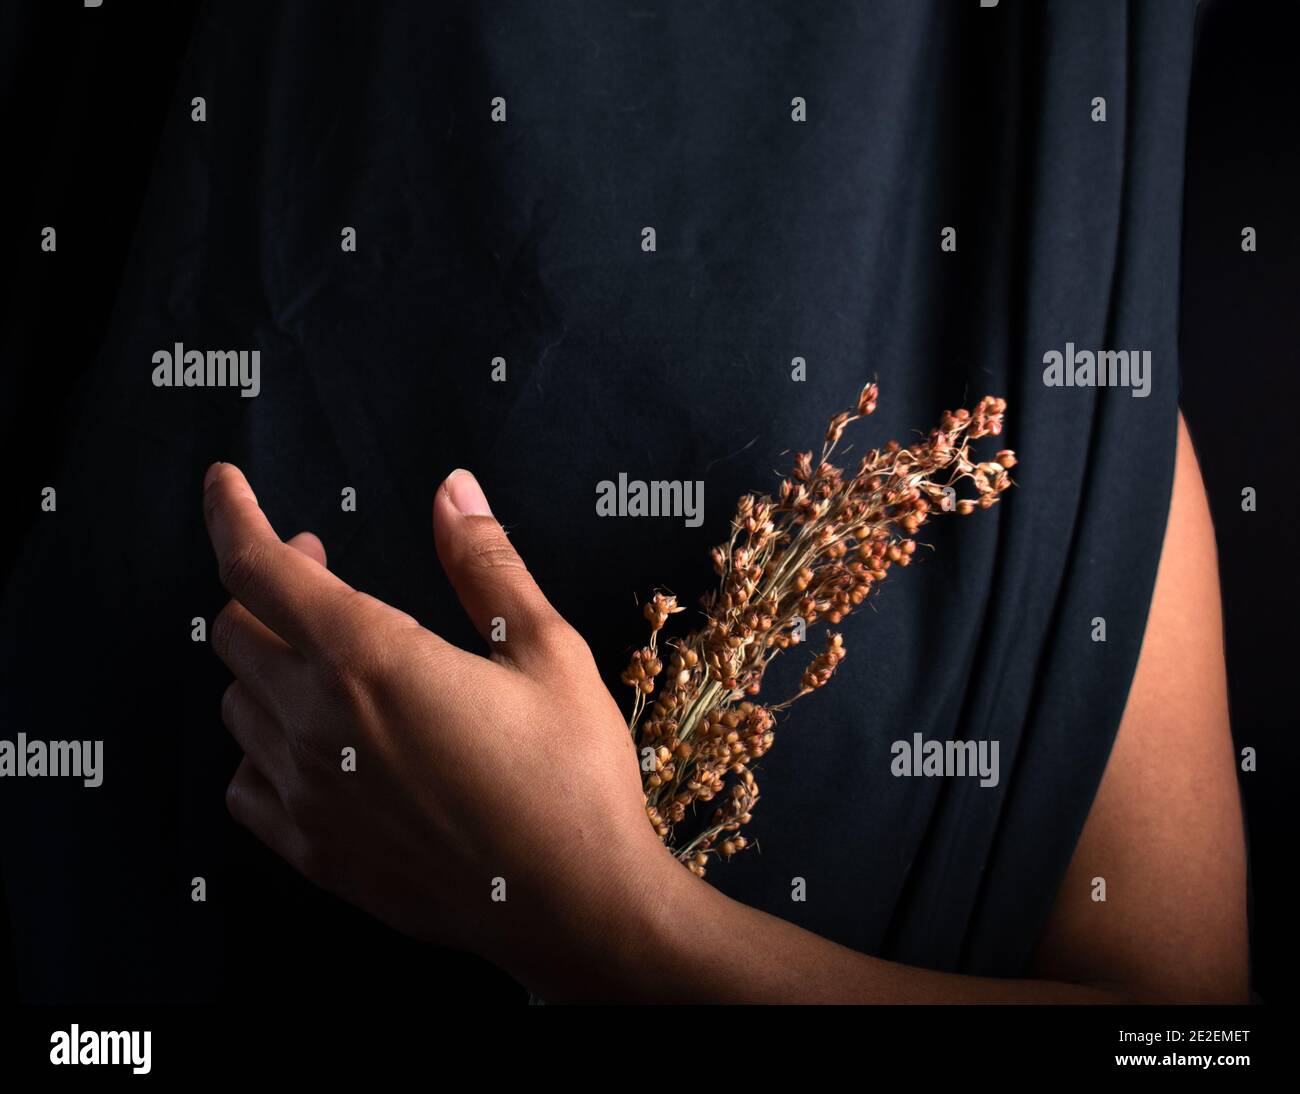 Beautiful hands gesture and grasp flower against black drape Stock Photo